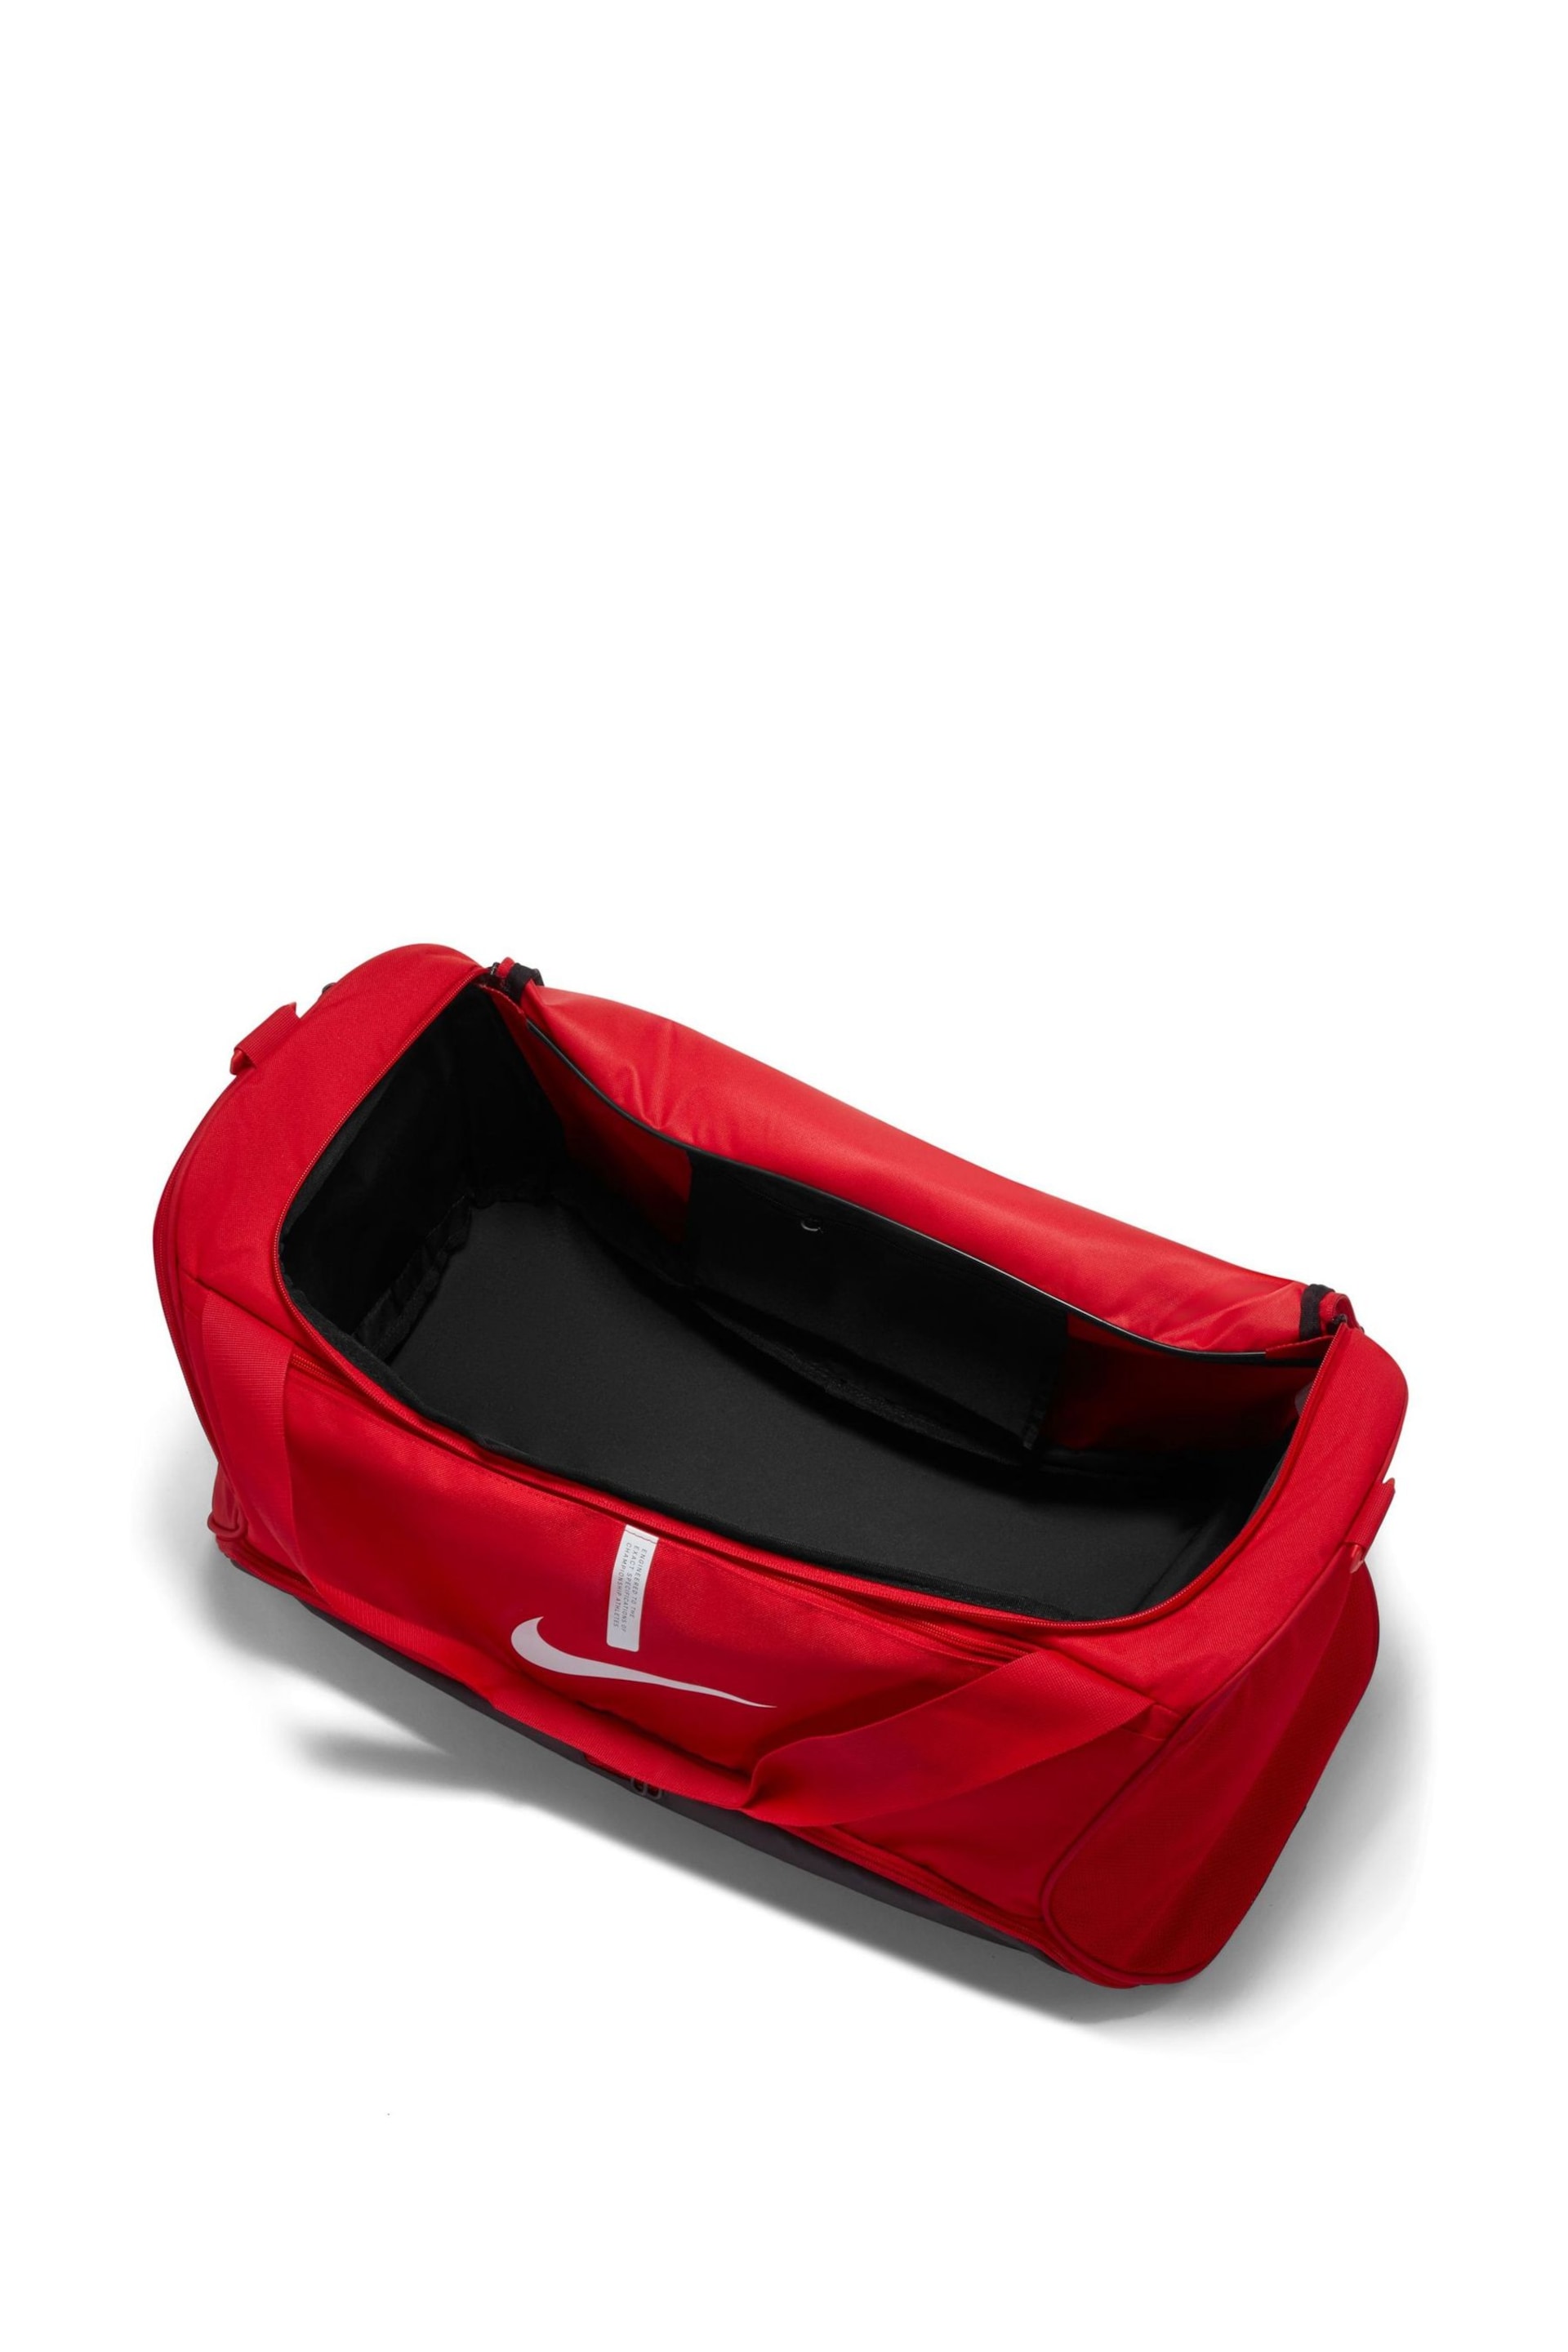 Nike Red Medium Academy Team Football Duffel Bag 60L - Image 7 of 11